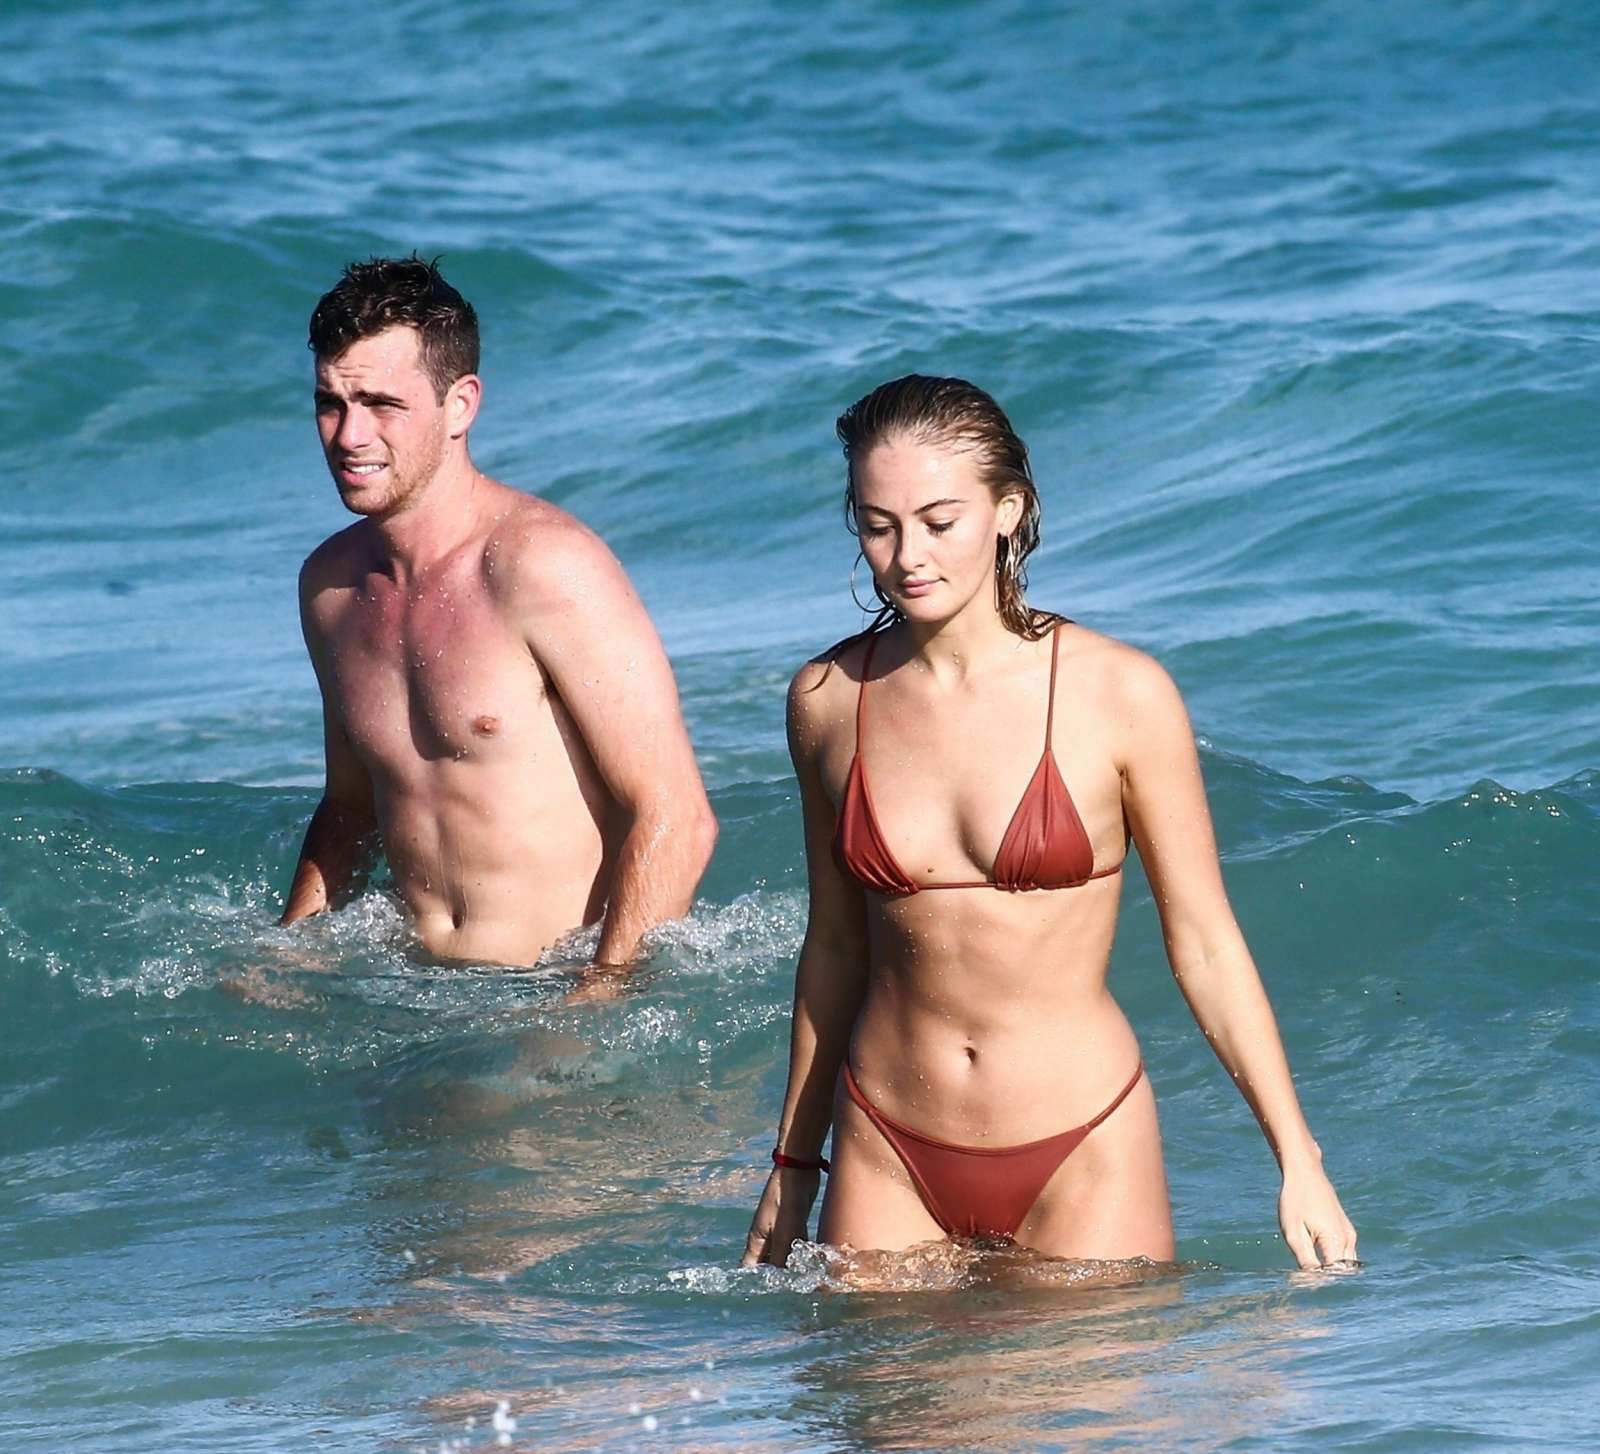 Selena Weber in Red Bikini at a beach in Miami